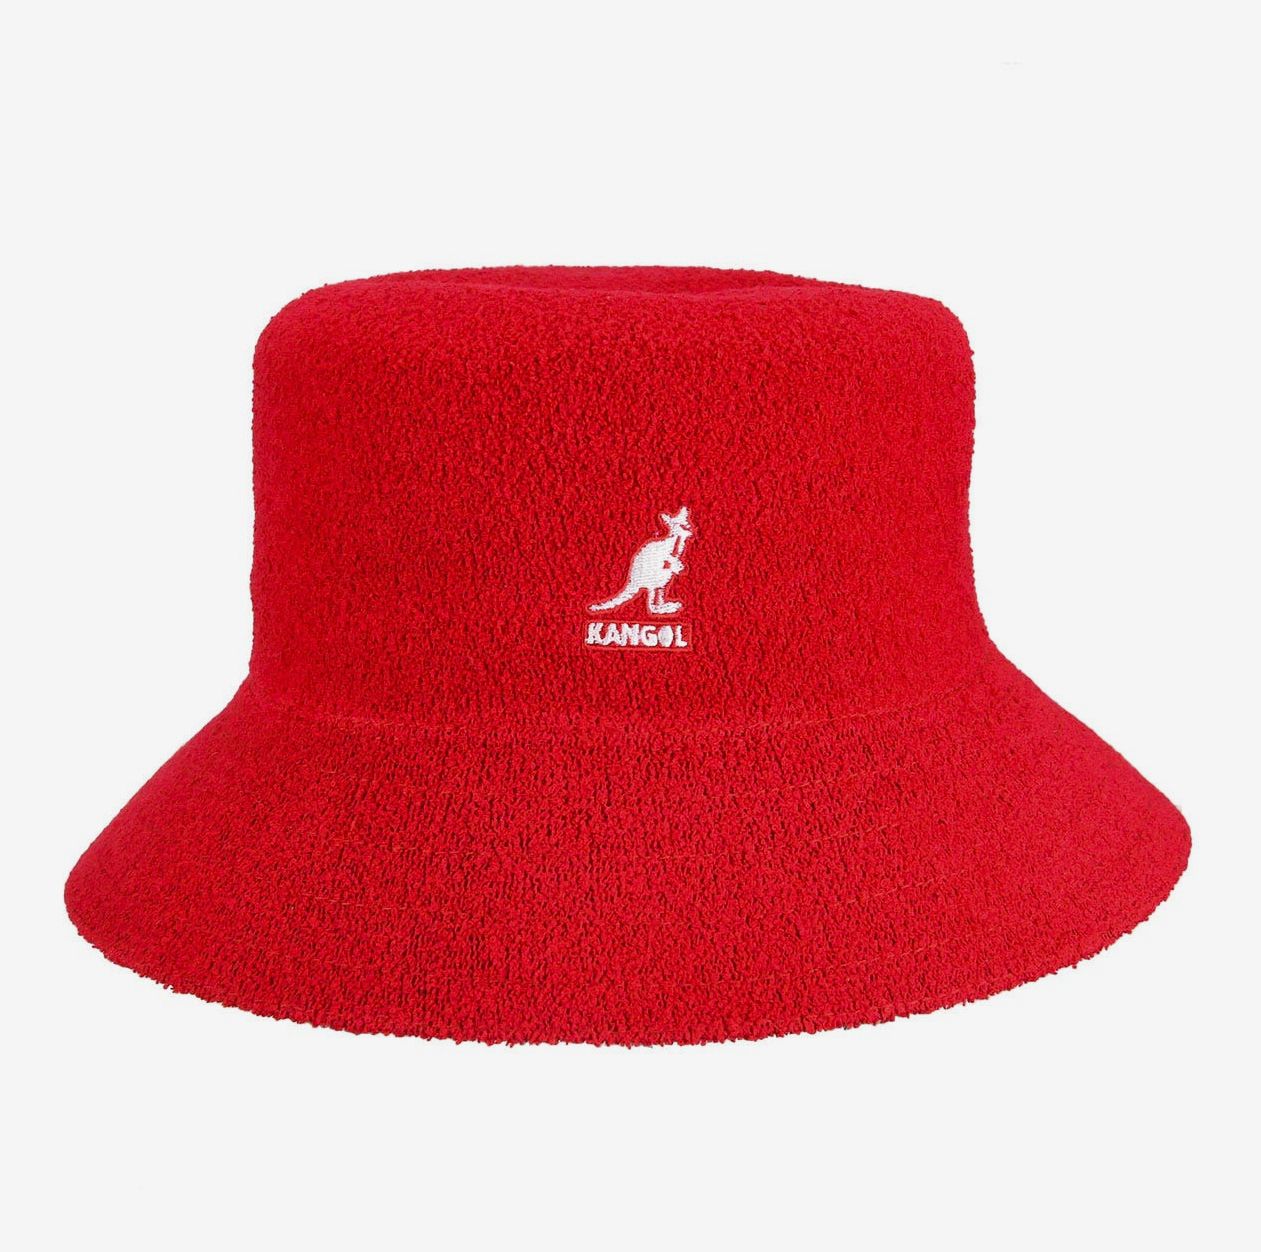 Larry 2019 Fashion Hip Hop Stussy Hat Cap Bucket